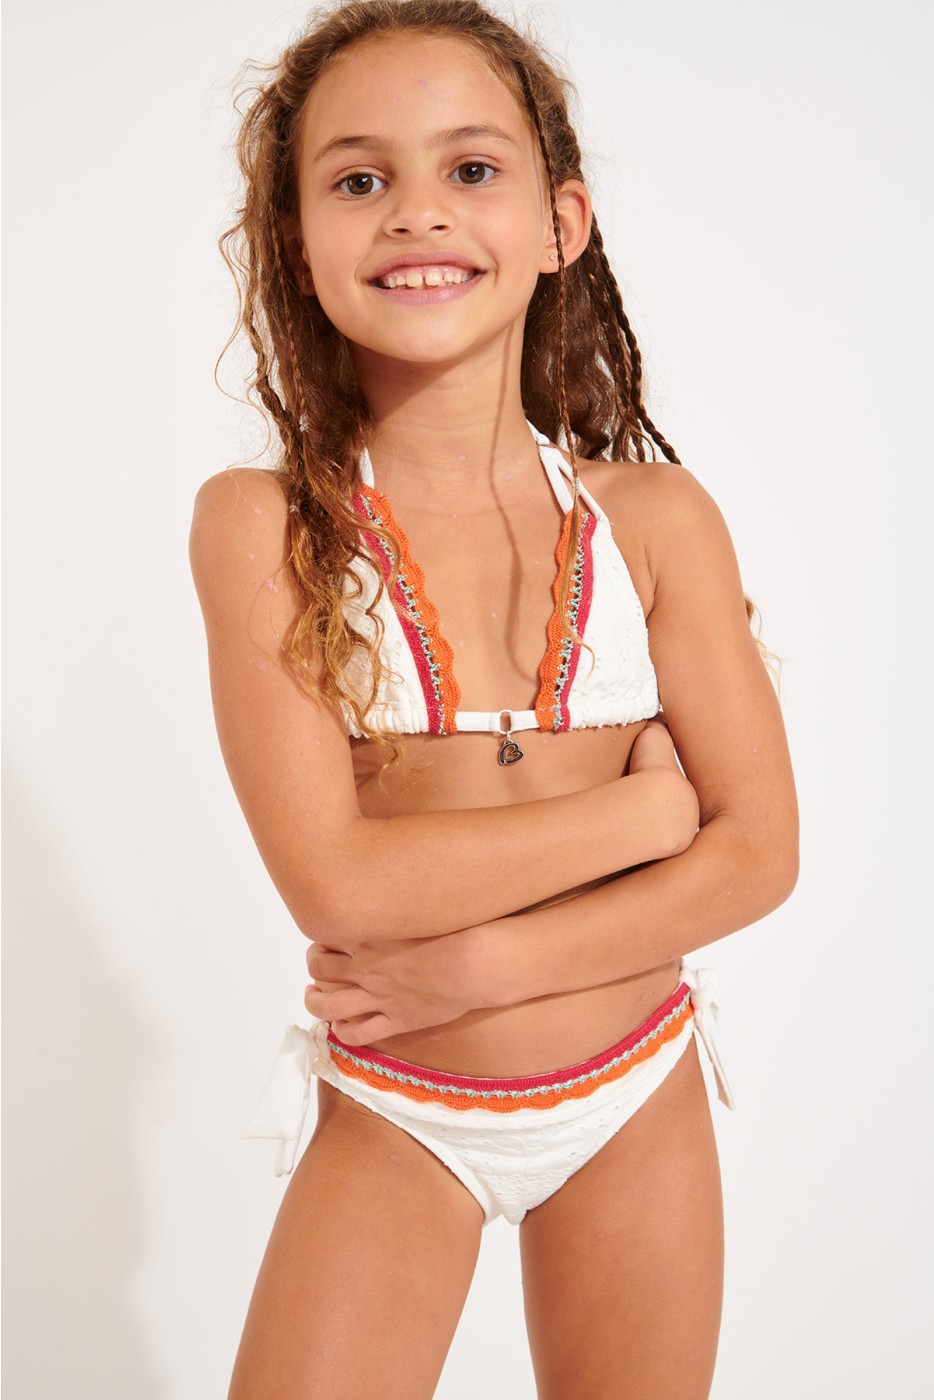 M KIMYA MAXIDAI Girl's two-piece swimsuit